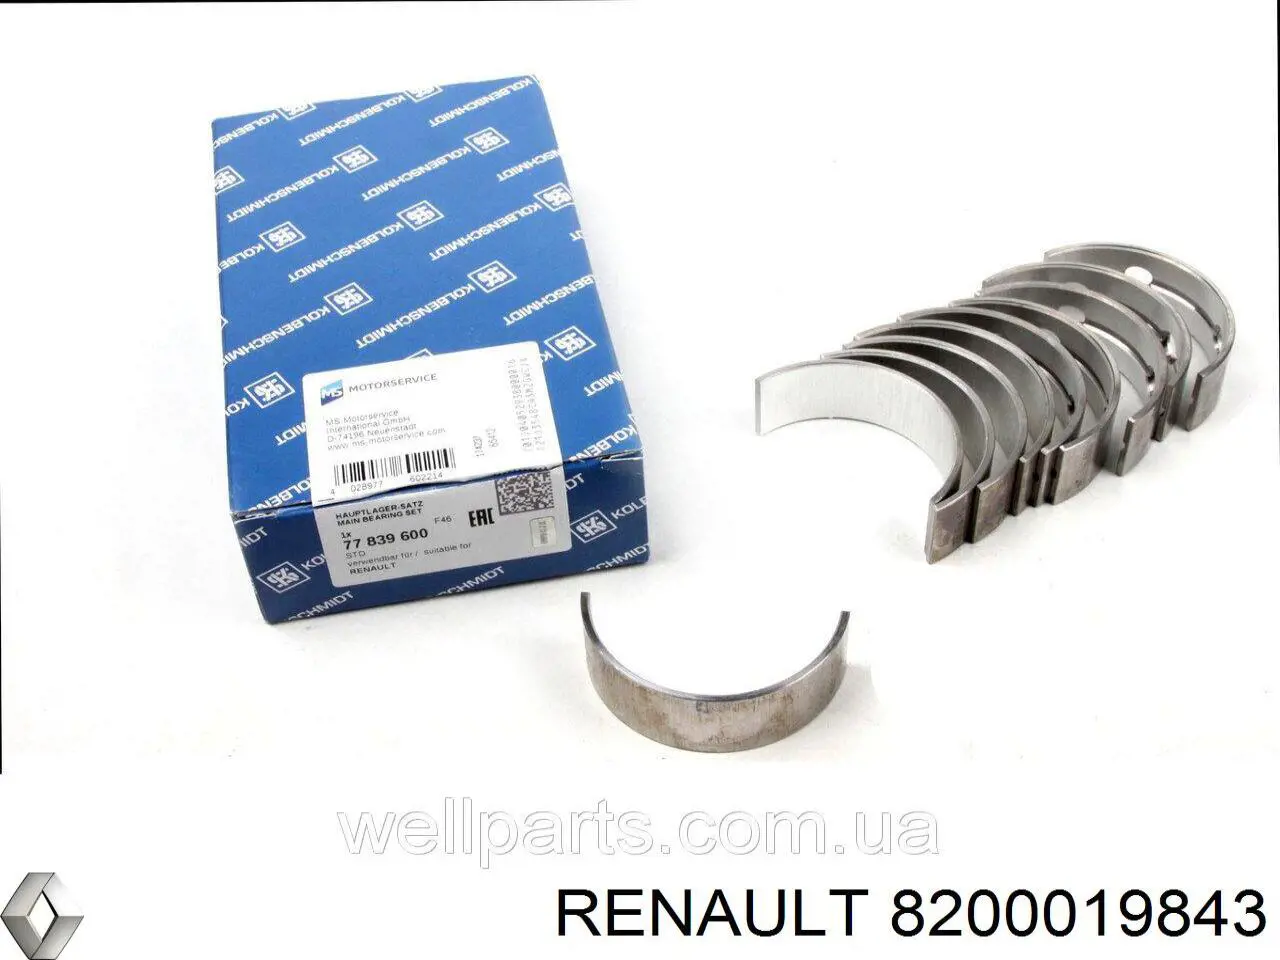 8200019843 Renault (RVI) вкладыши коленвала коренные, комплект, стандарт (std)